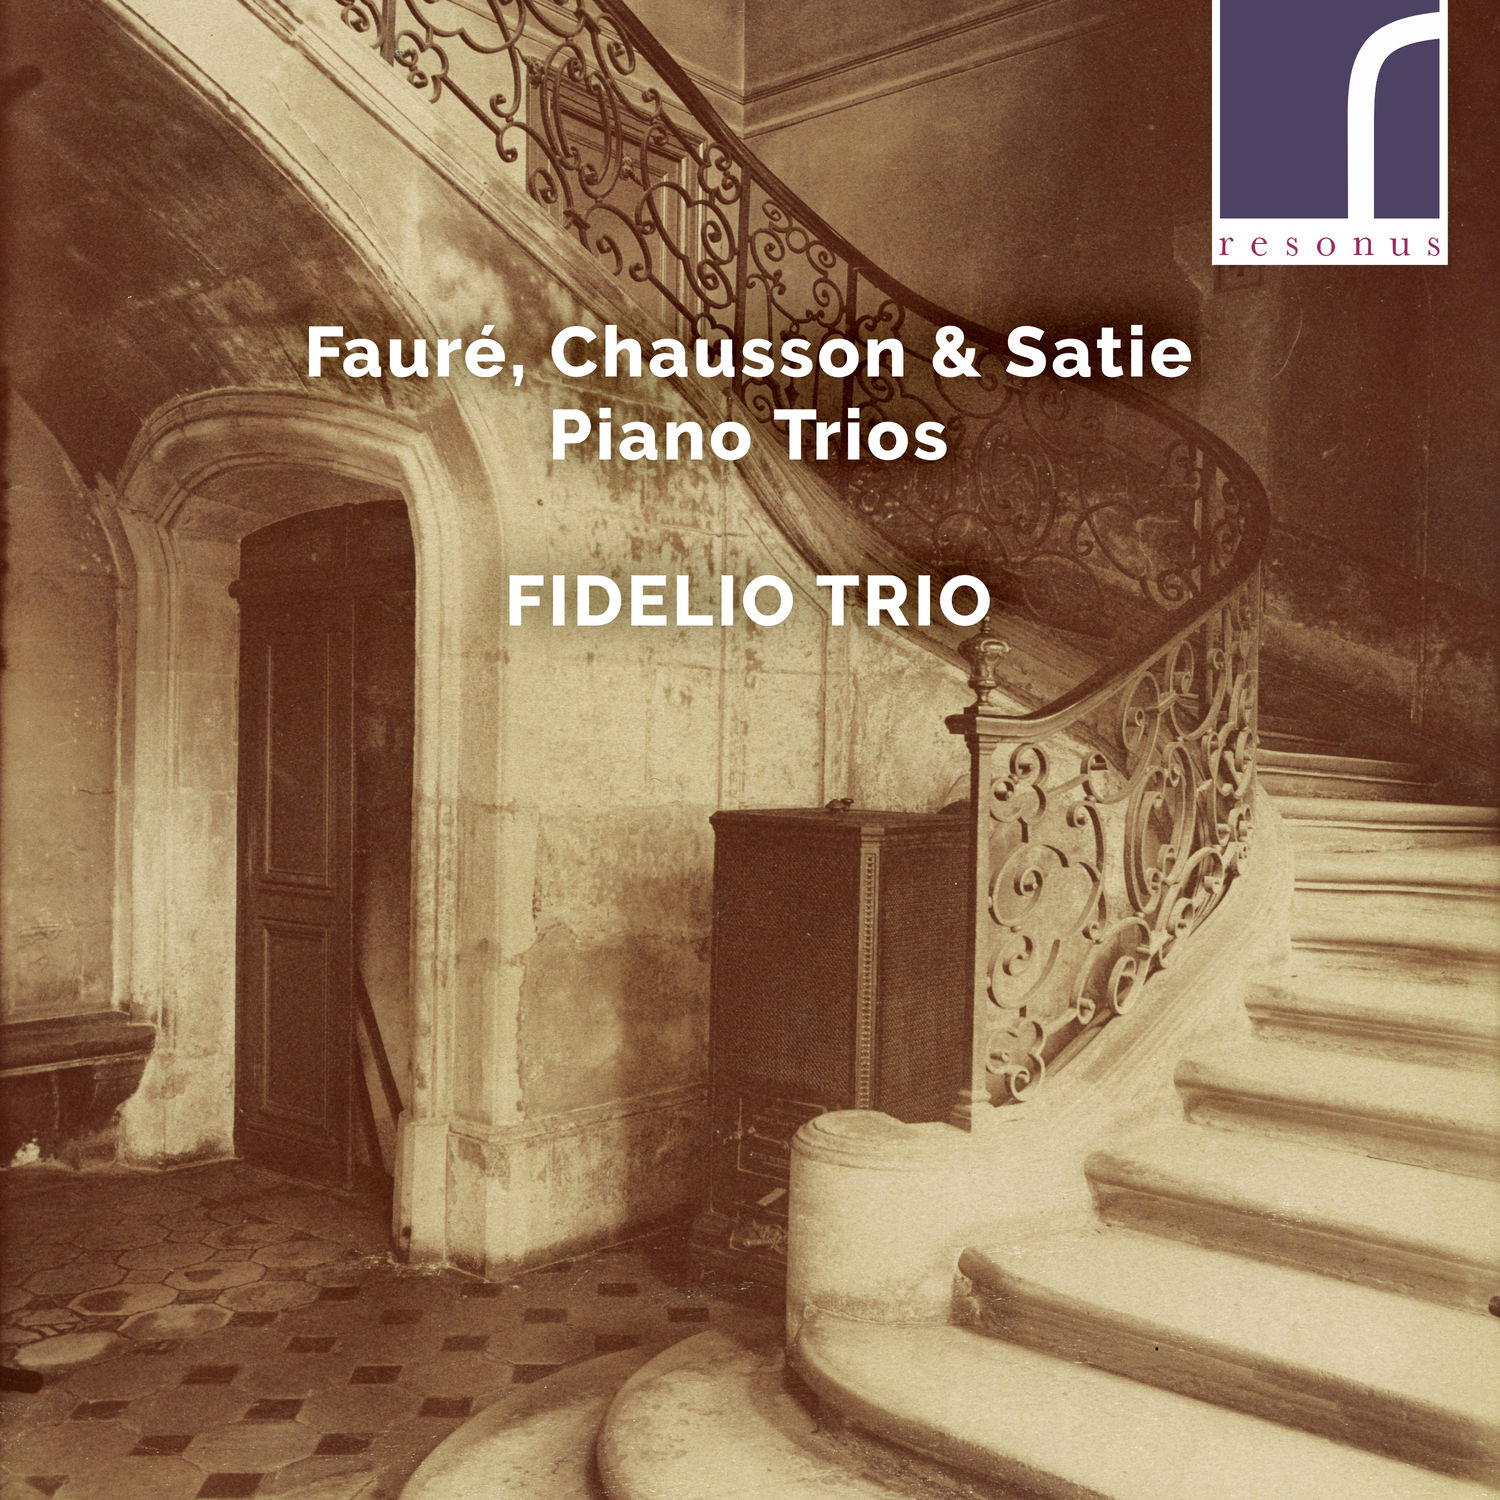 Fidelio Trio - Faure, Chausson & Satie: Piano Trios (2018) [FLAC 24bit/96kHz]